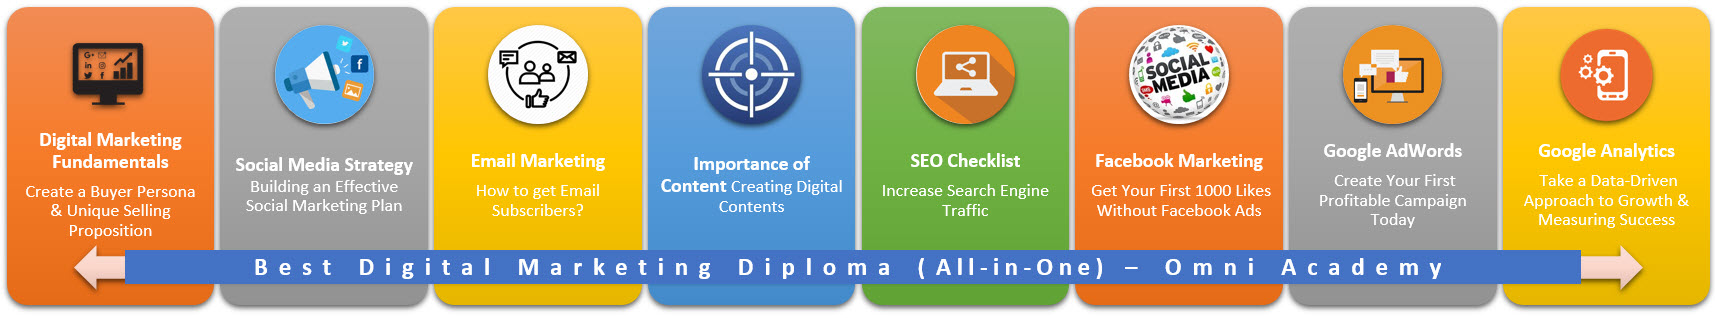 digital-marketing-diploma-all-course-map-omni-academy